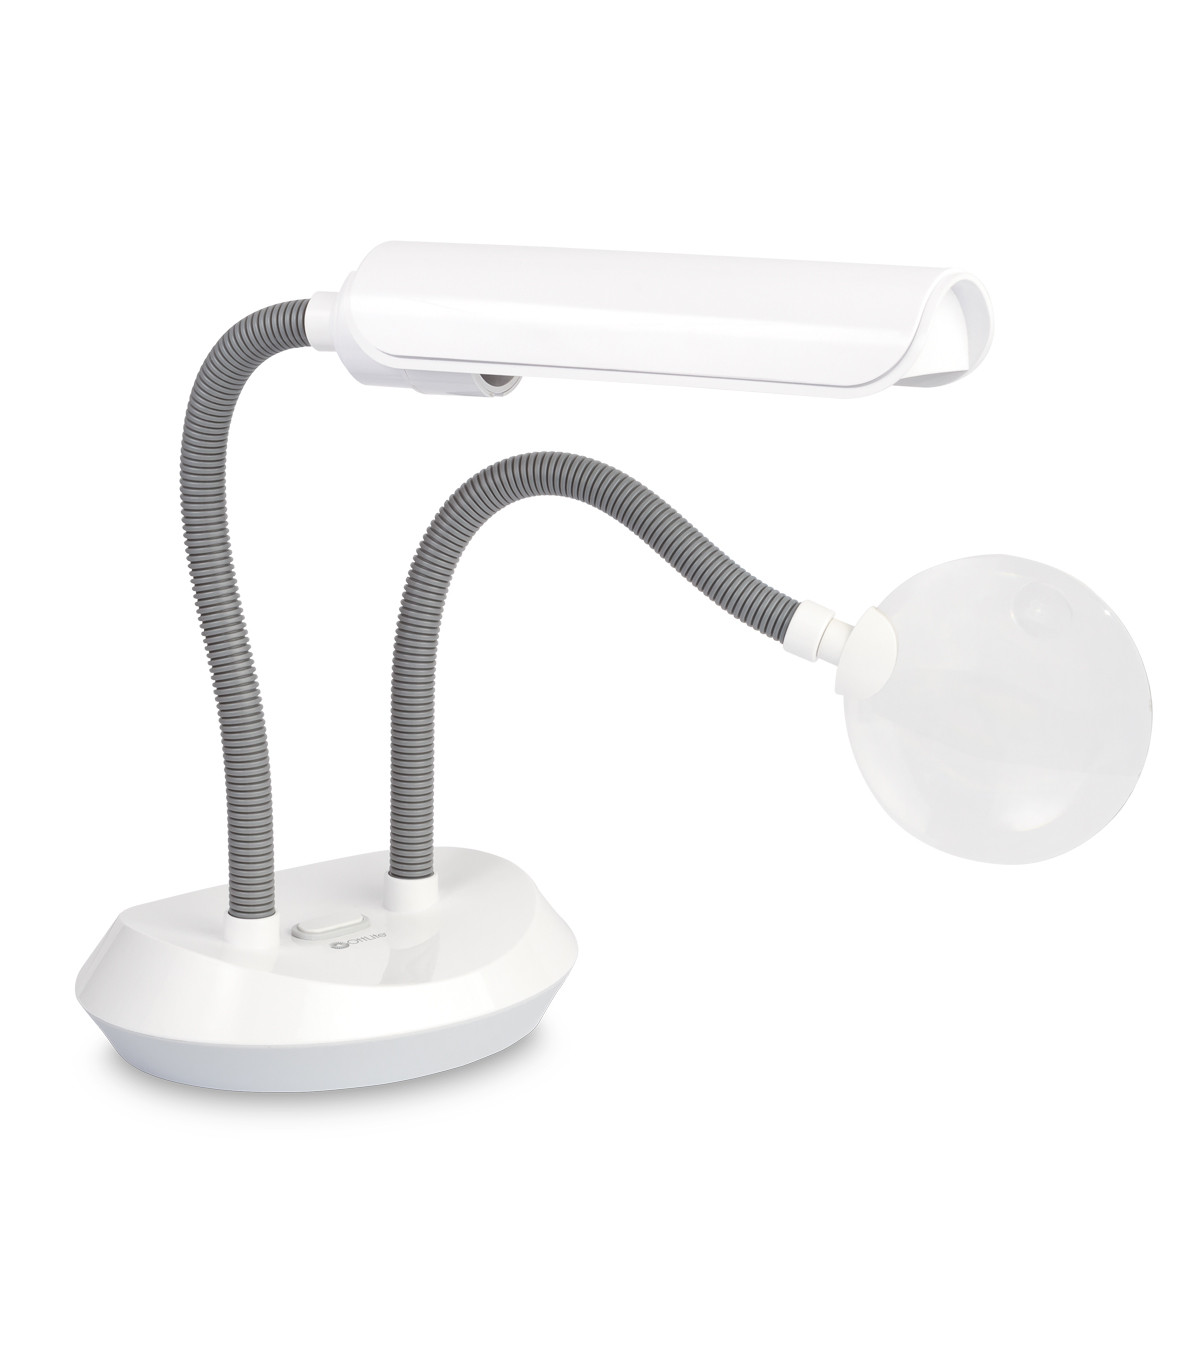 Best ideas about Ottlite Desk Lamp
. Save or Pin DuoFlex OttLite Magnifier Lamp 13W Desk Lamp Now.